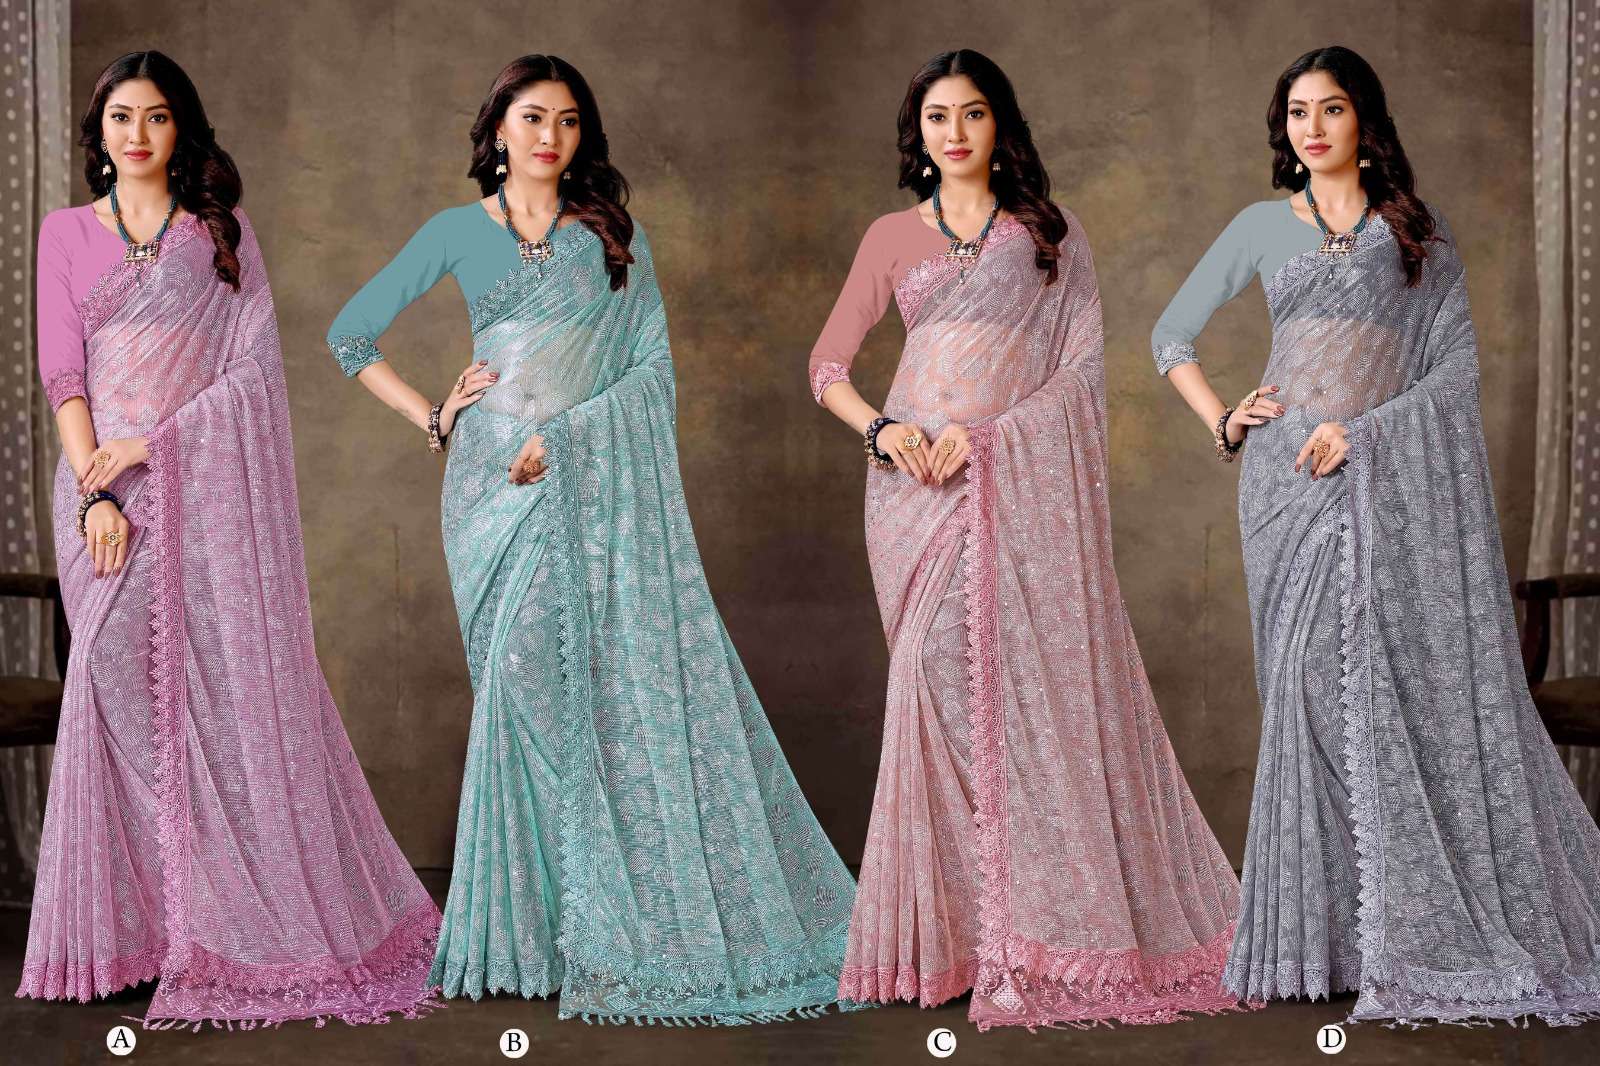 Anupa Lycra Bollywood exclusive saree collection wholesale